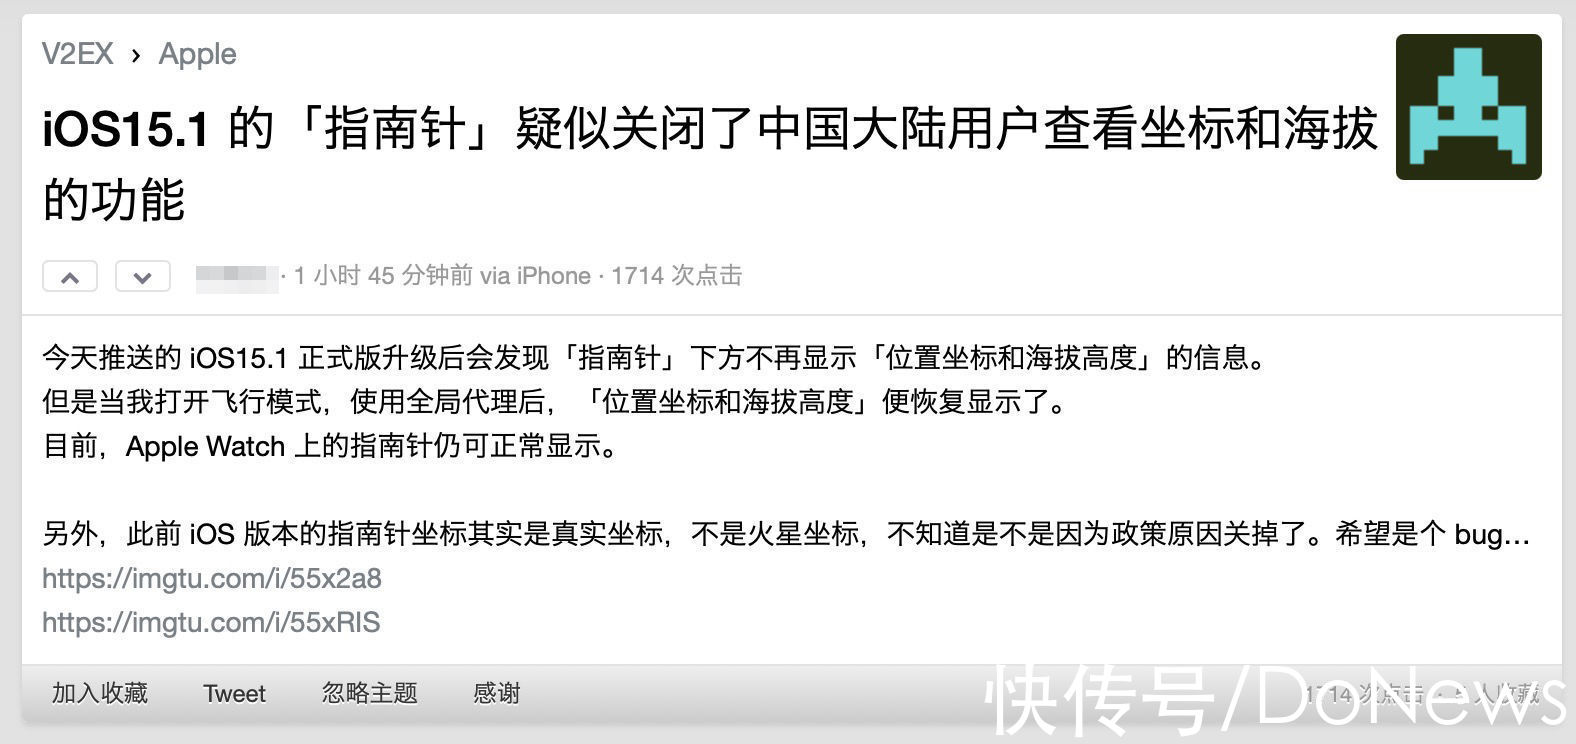 ios|iOS 15.1 疑似阻止中国用户查看指南针应用坐标与海拔高度信息